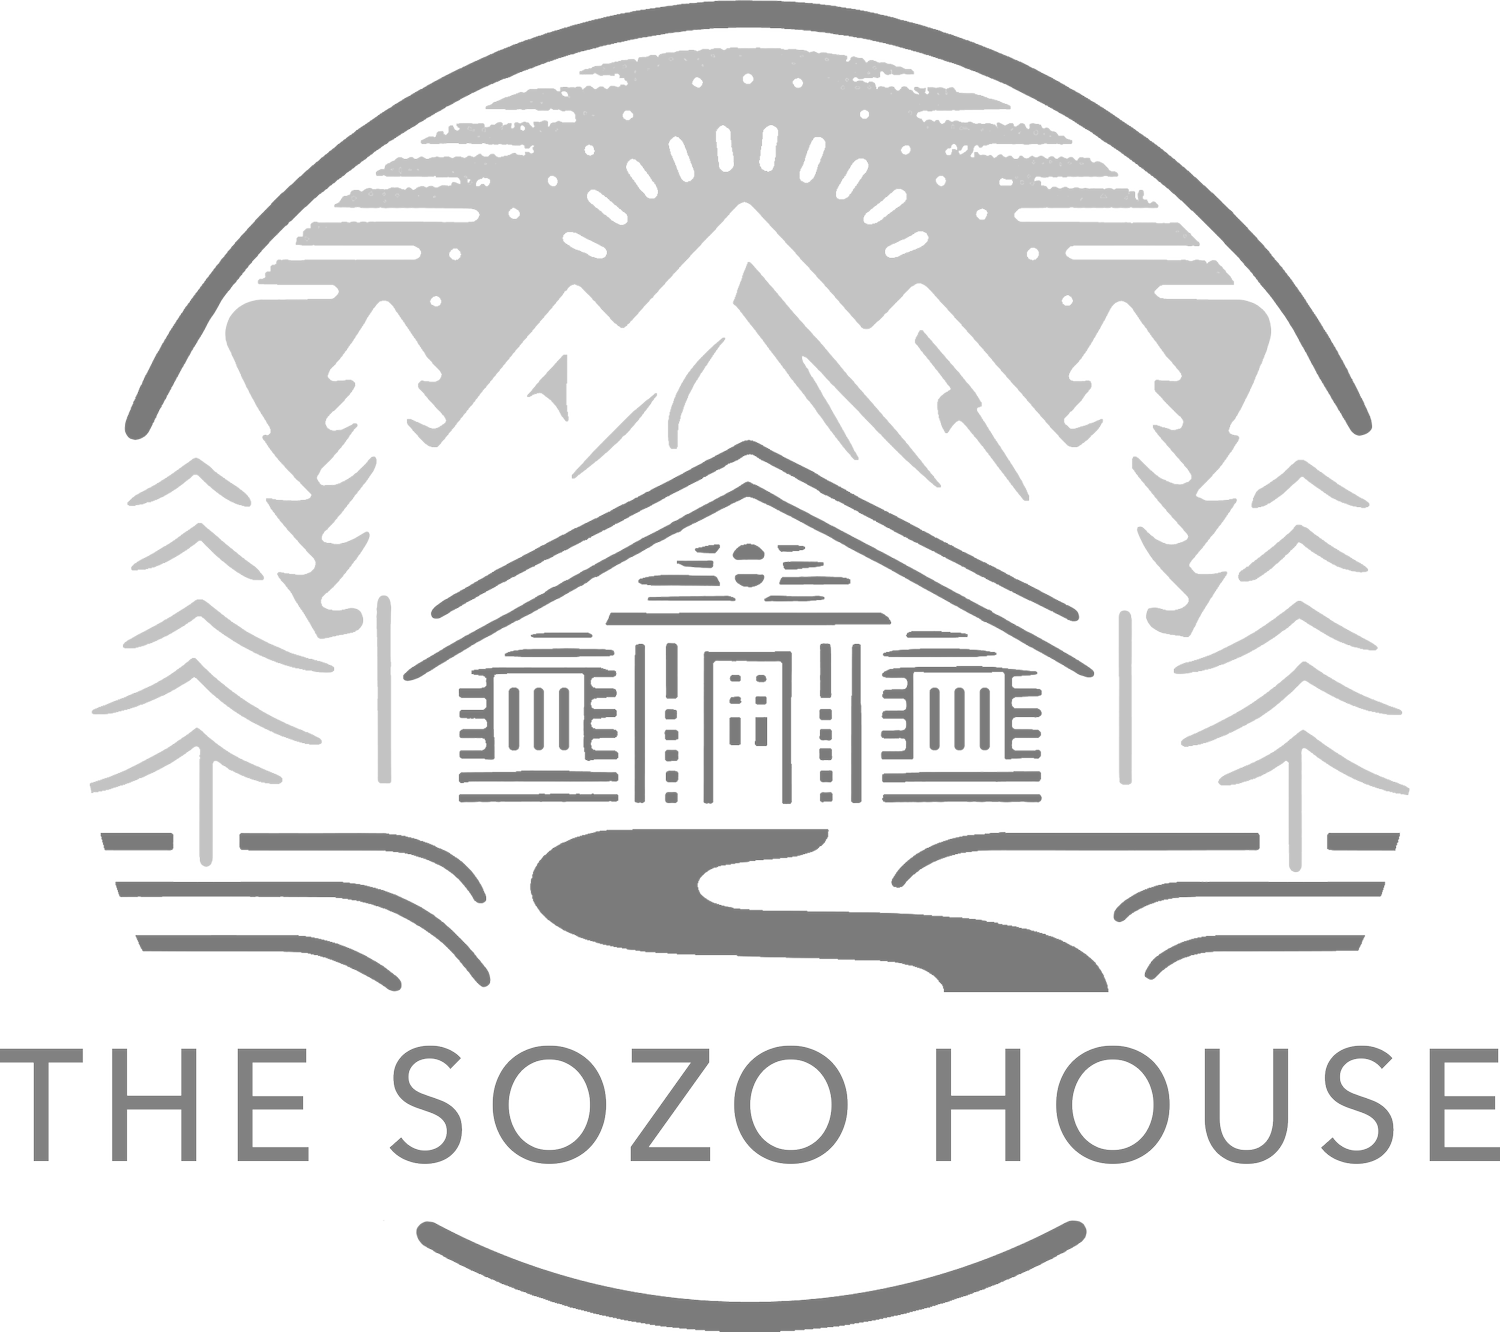 The Sozo House